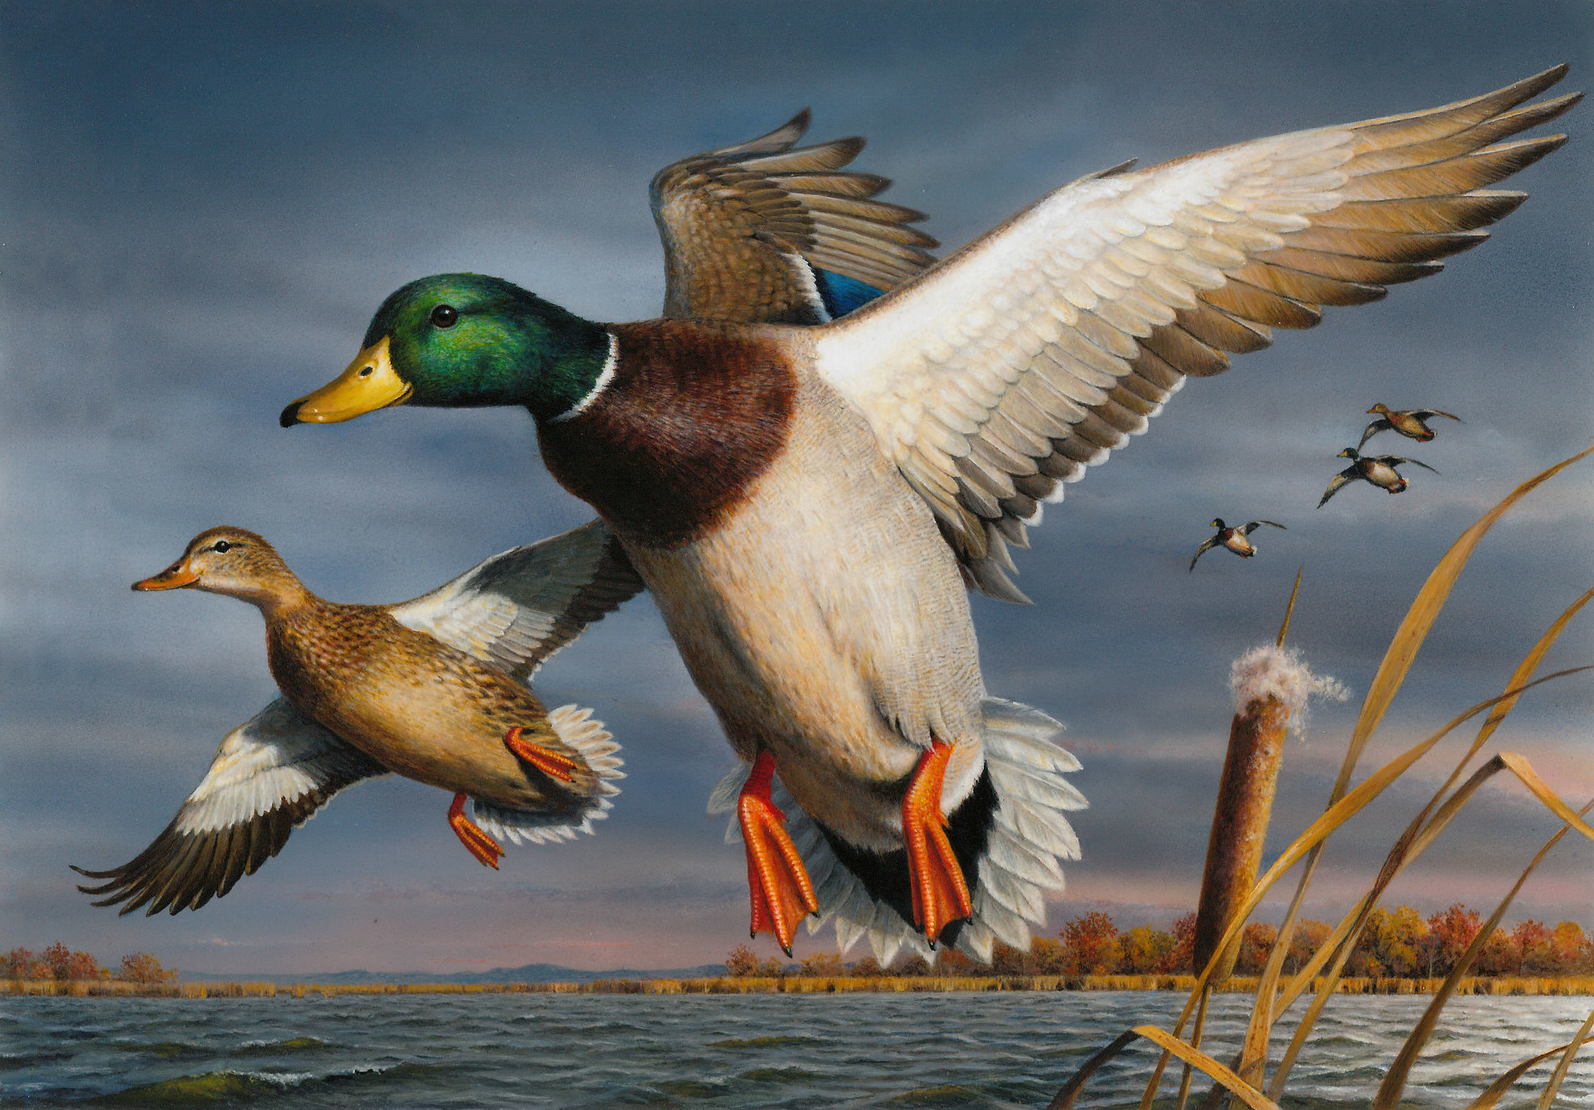 2017 Federal Duck Stamp Contest winning artwork featuring a mallard pair in flight over a wetland